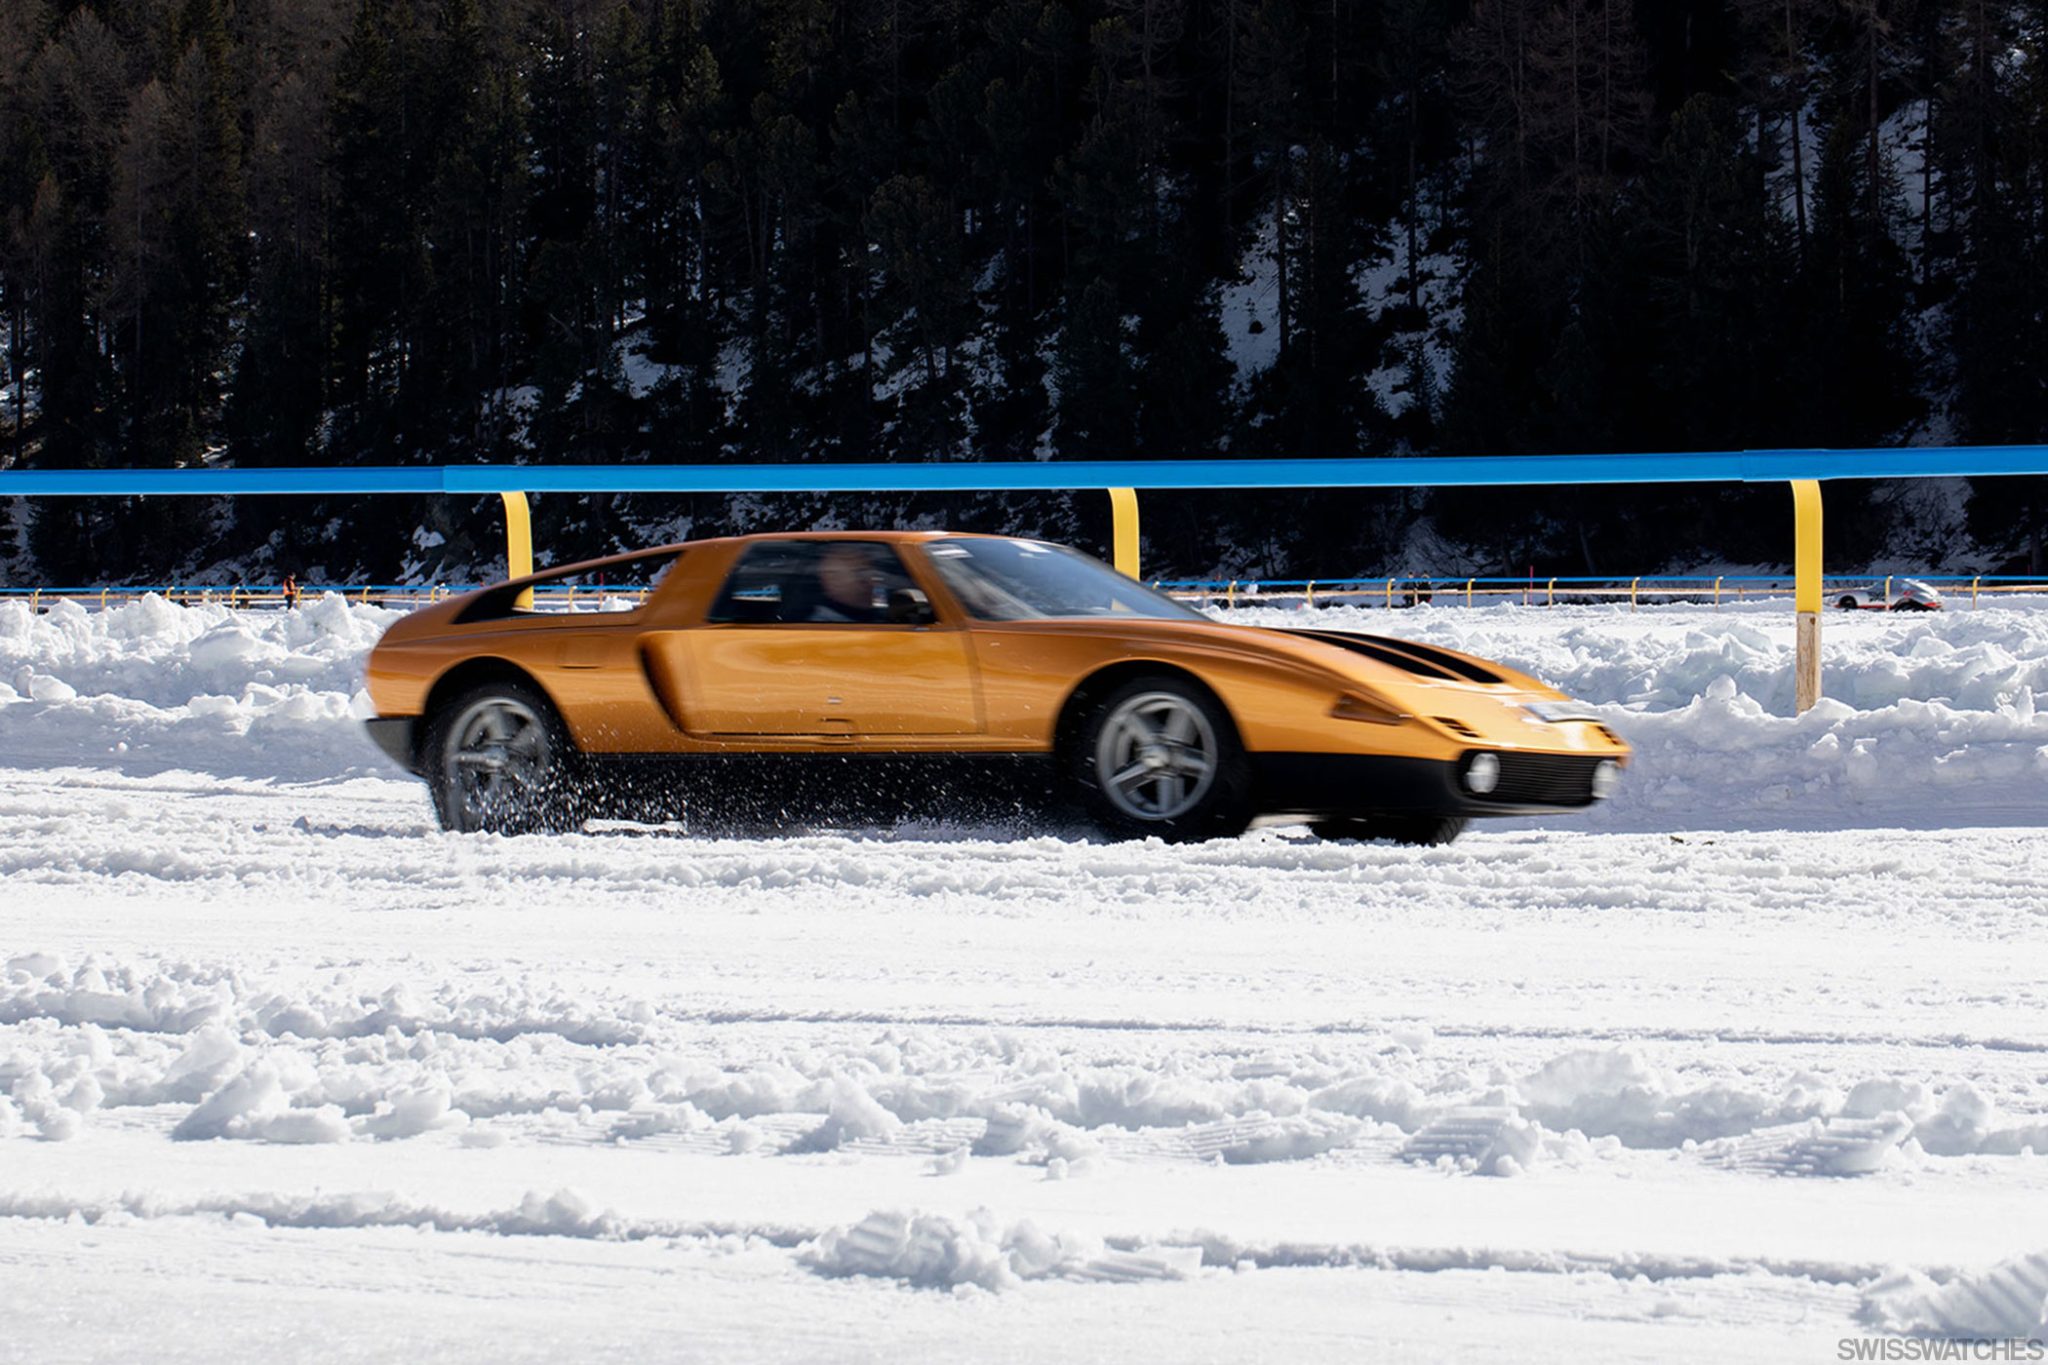 The-ICE-St-Moritz-Richard-Mille-Mercedes-Benz-C-111-II-in-Action